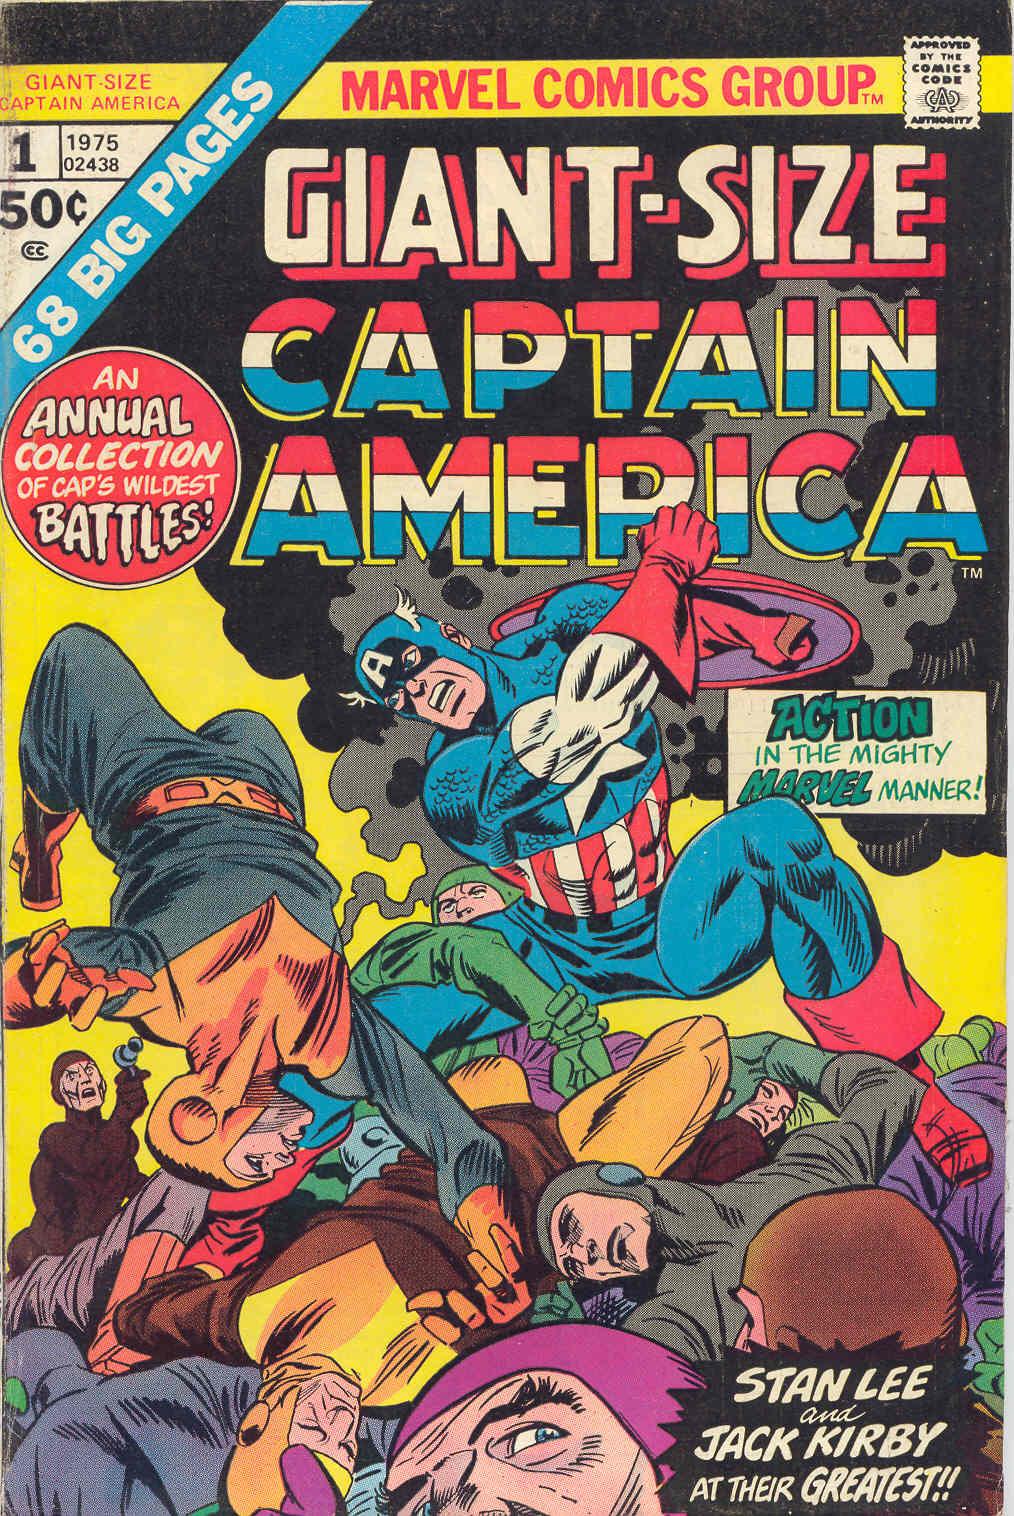 Giant-Size Captain America Vol. 1 #1